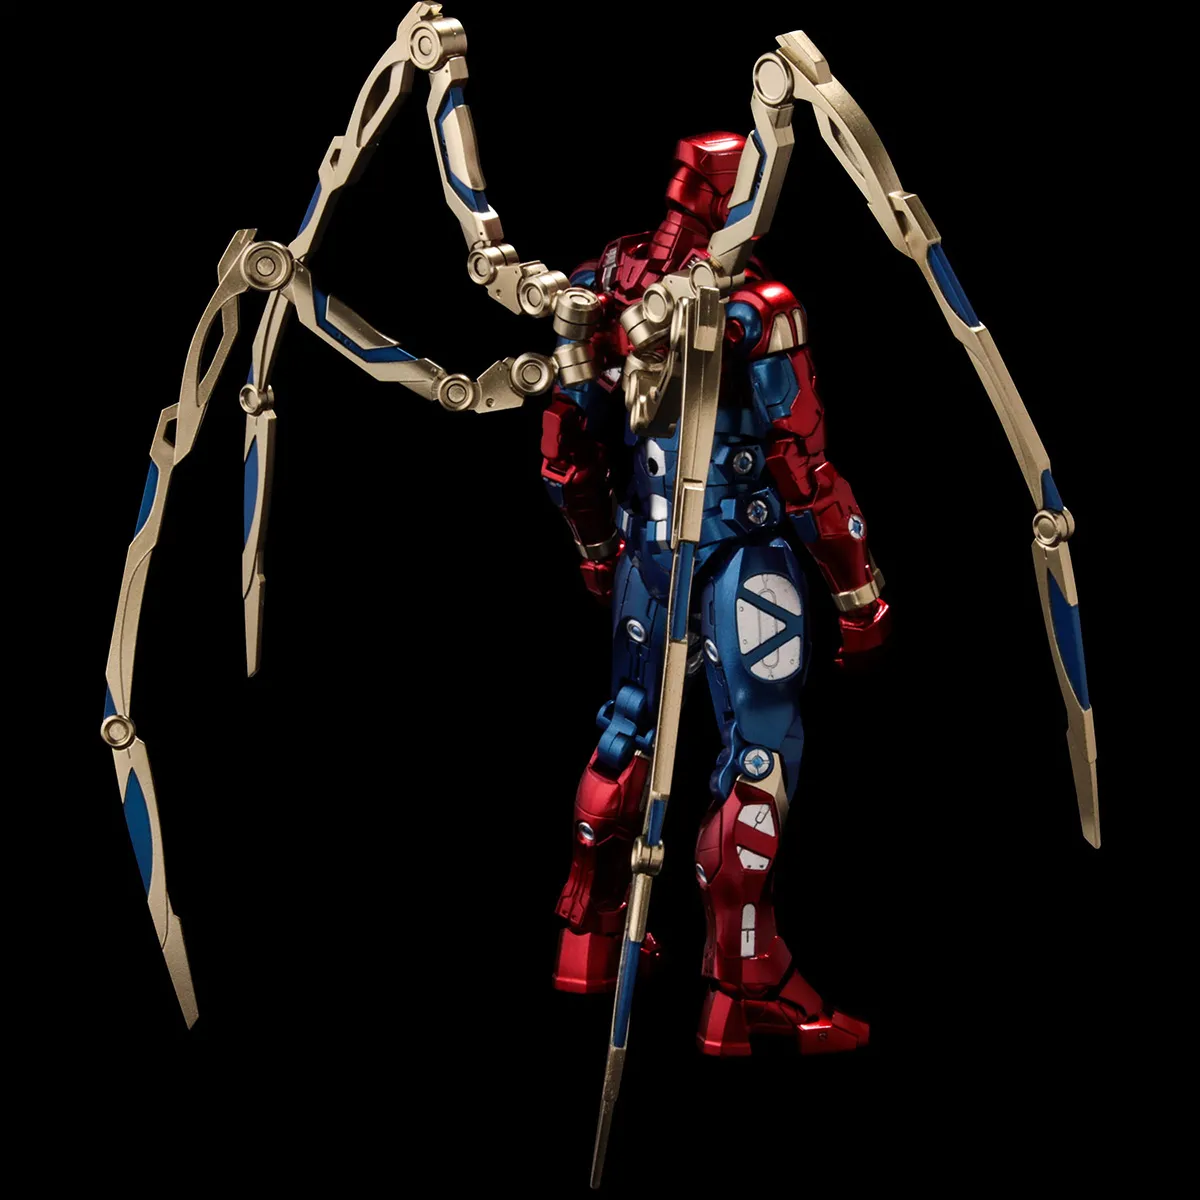 Iron Spider "Marvel" Sentinel Fighting Armor